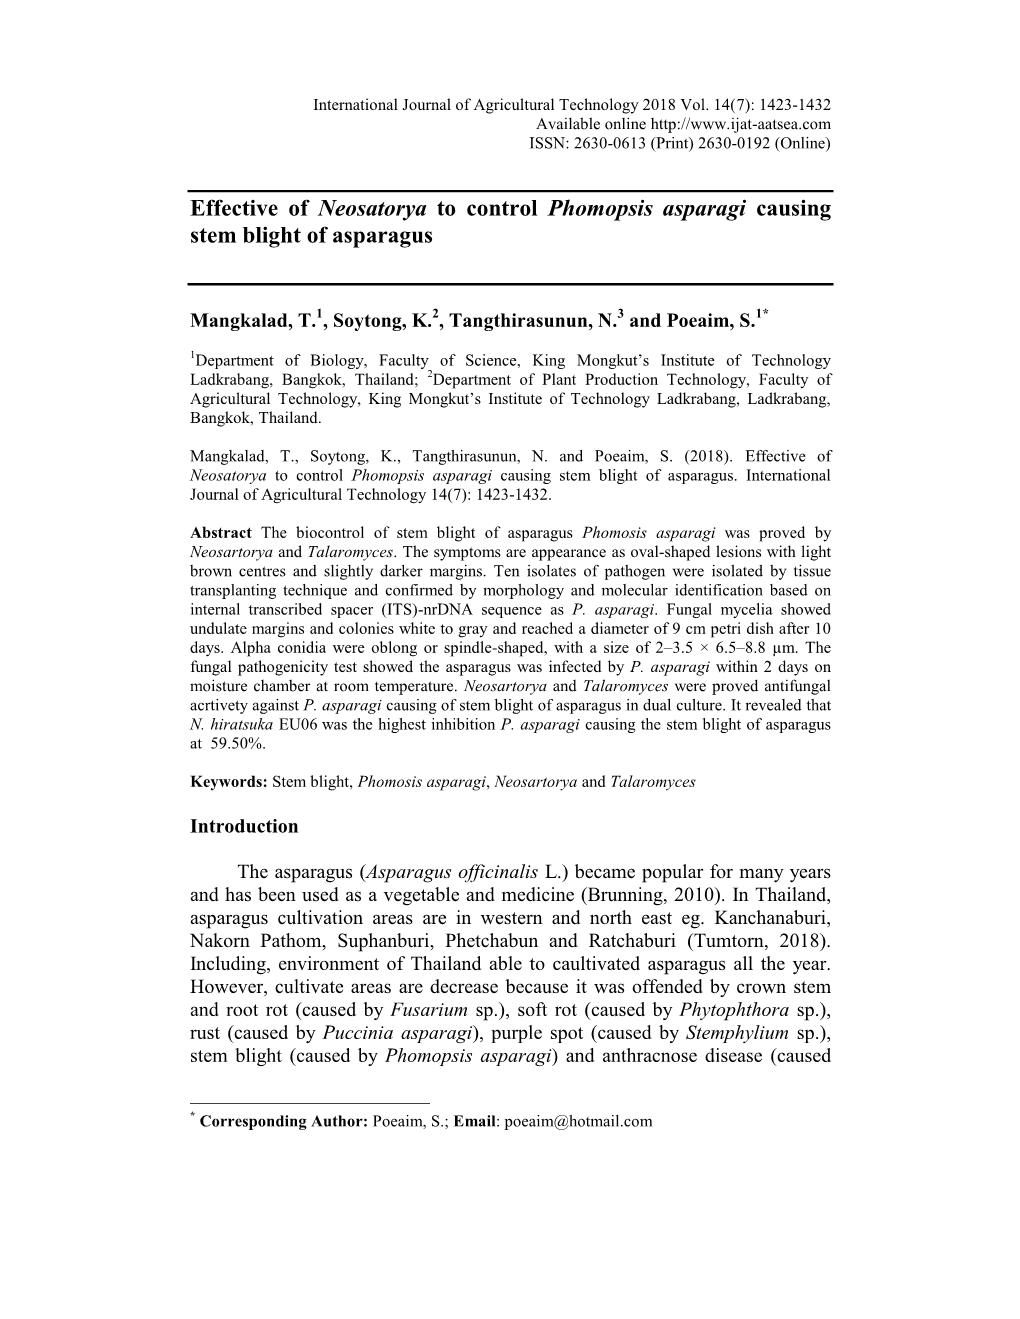 Effective of Neosatorya to Control Phomopsis Asparagi Causing Stem Blight of Asparagus